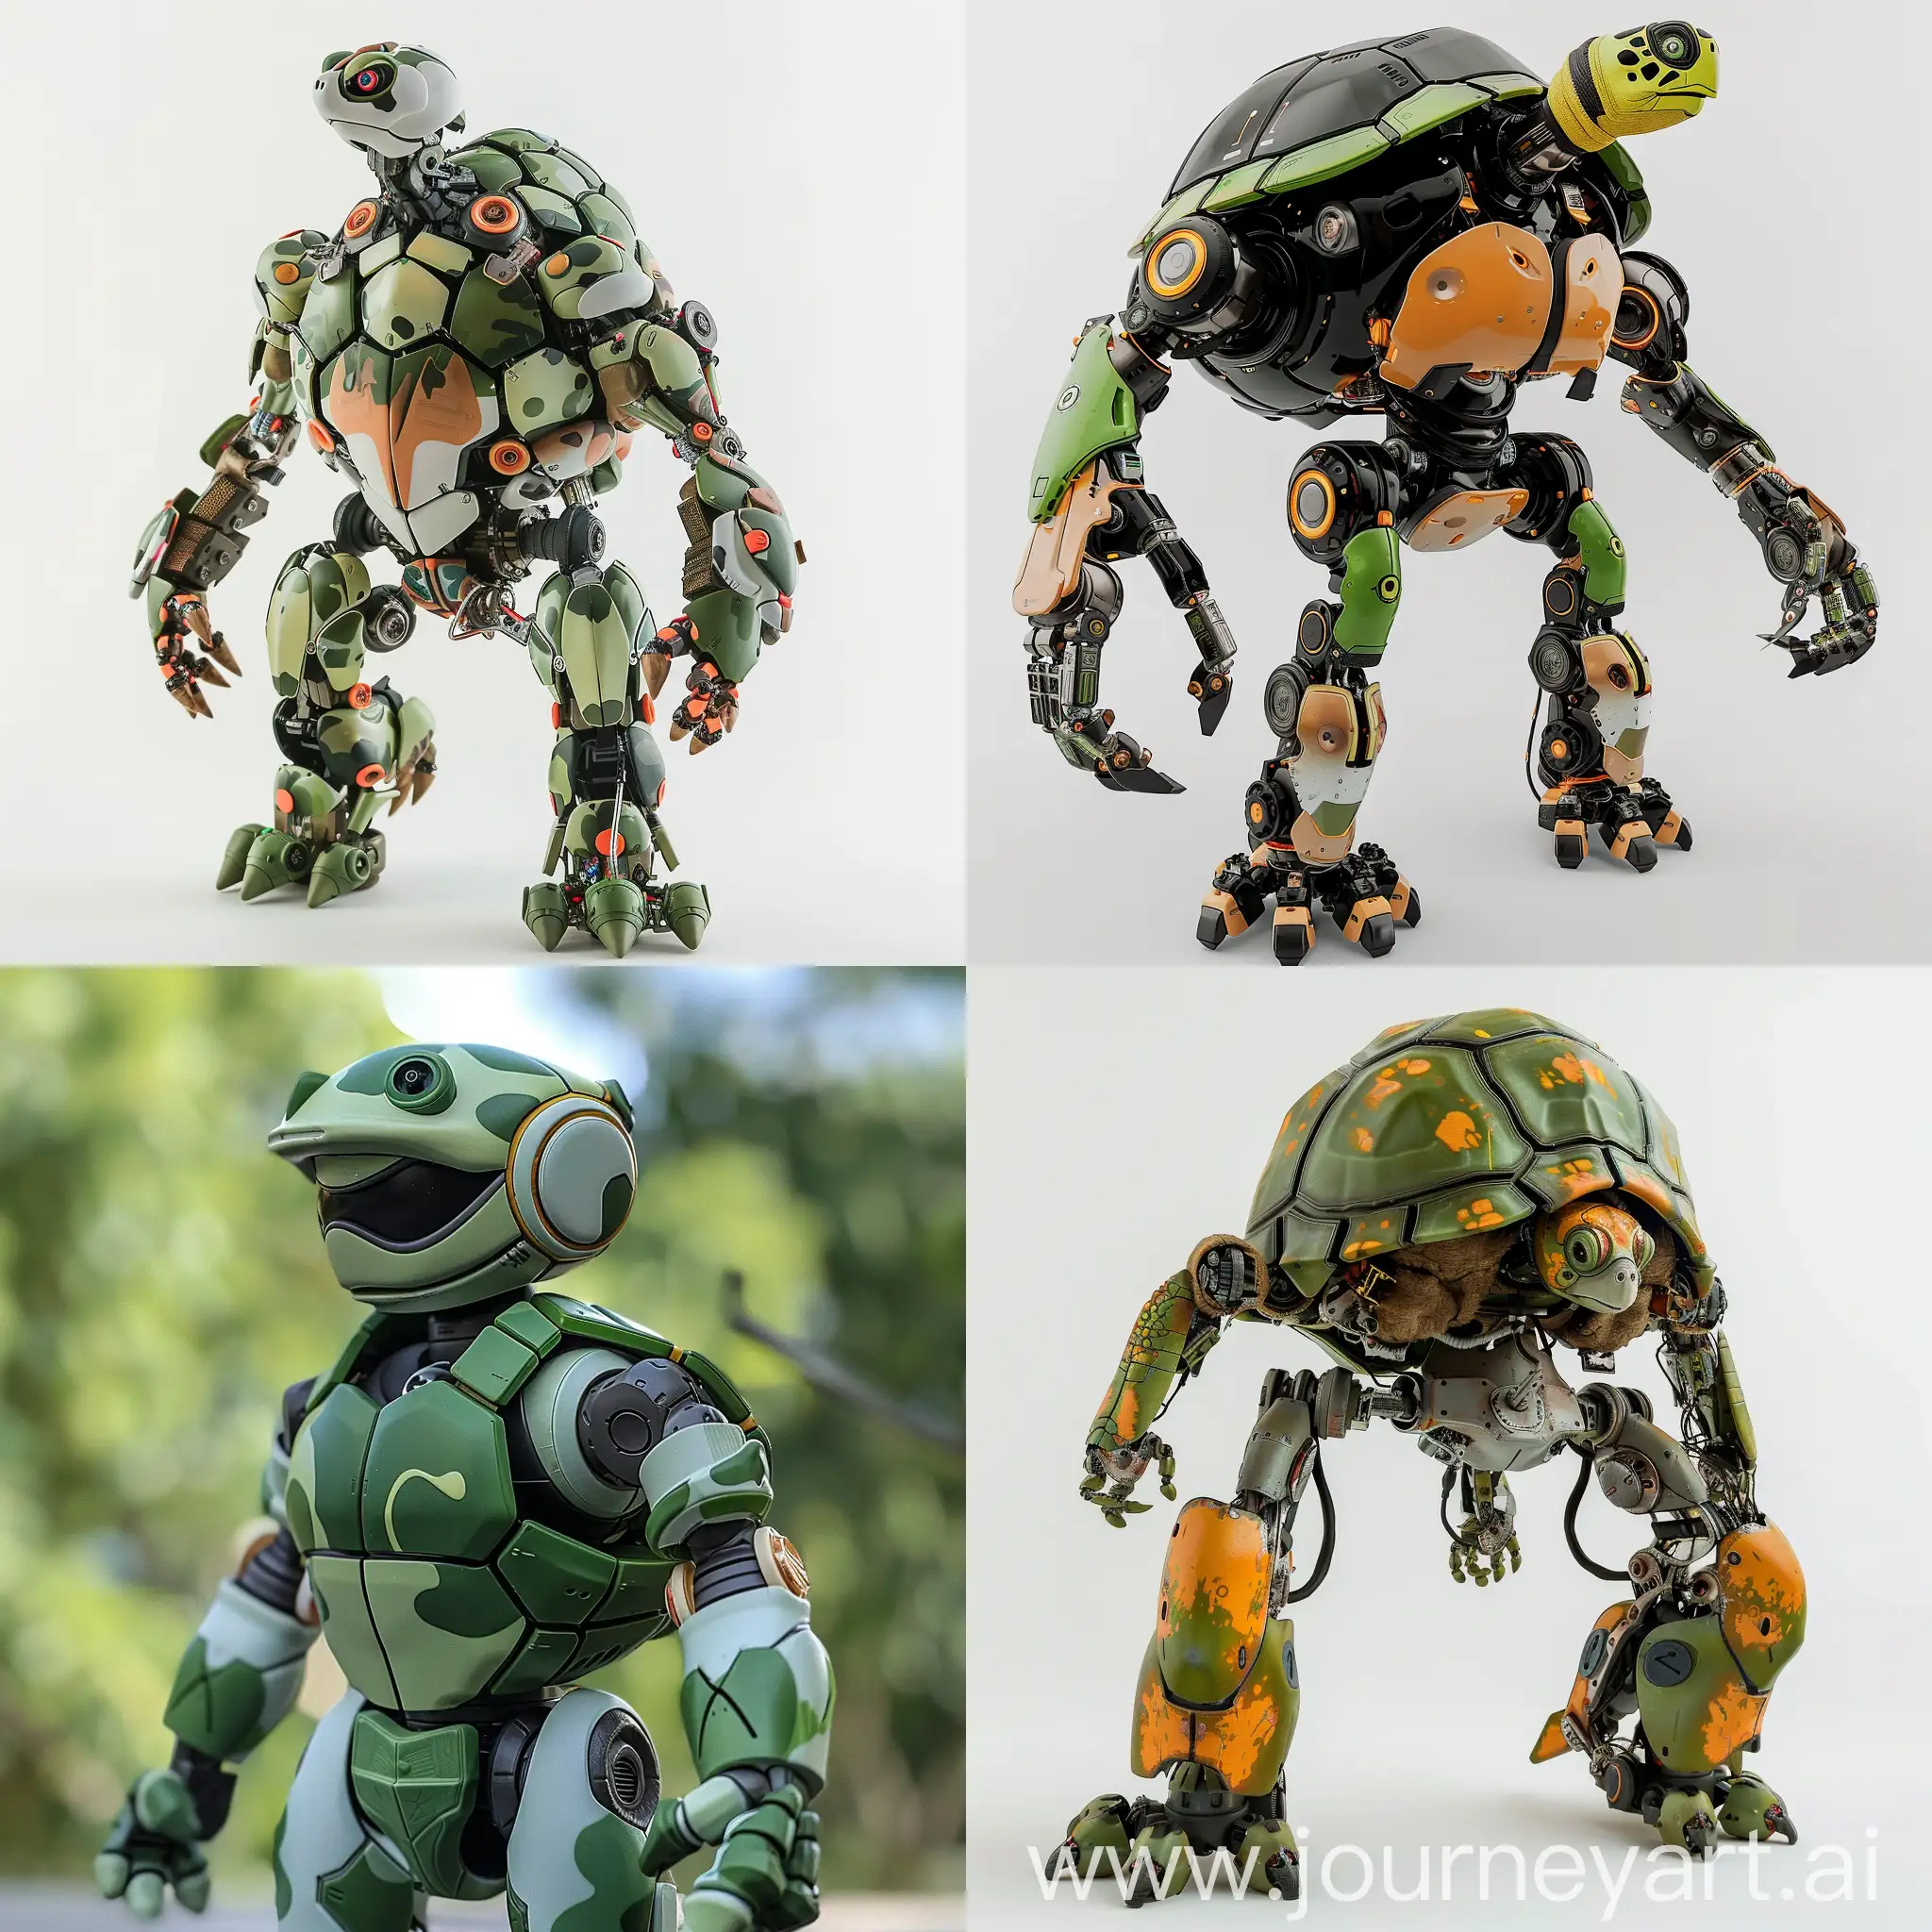 Adorable-TurtleThemed-Humanoid-Robot